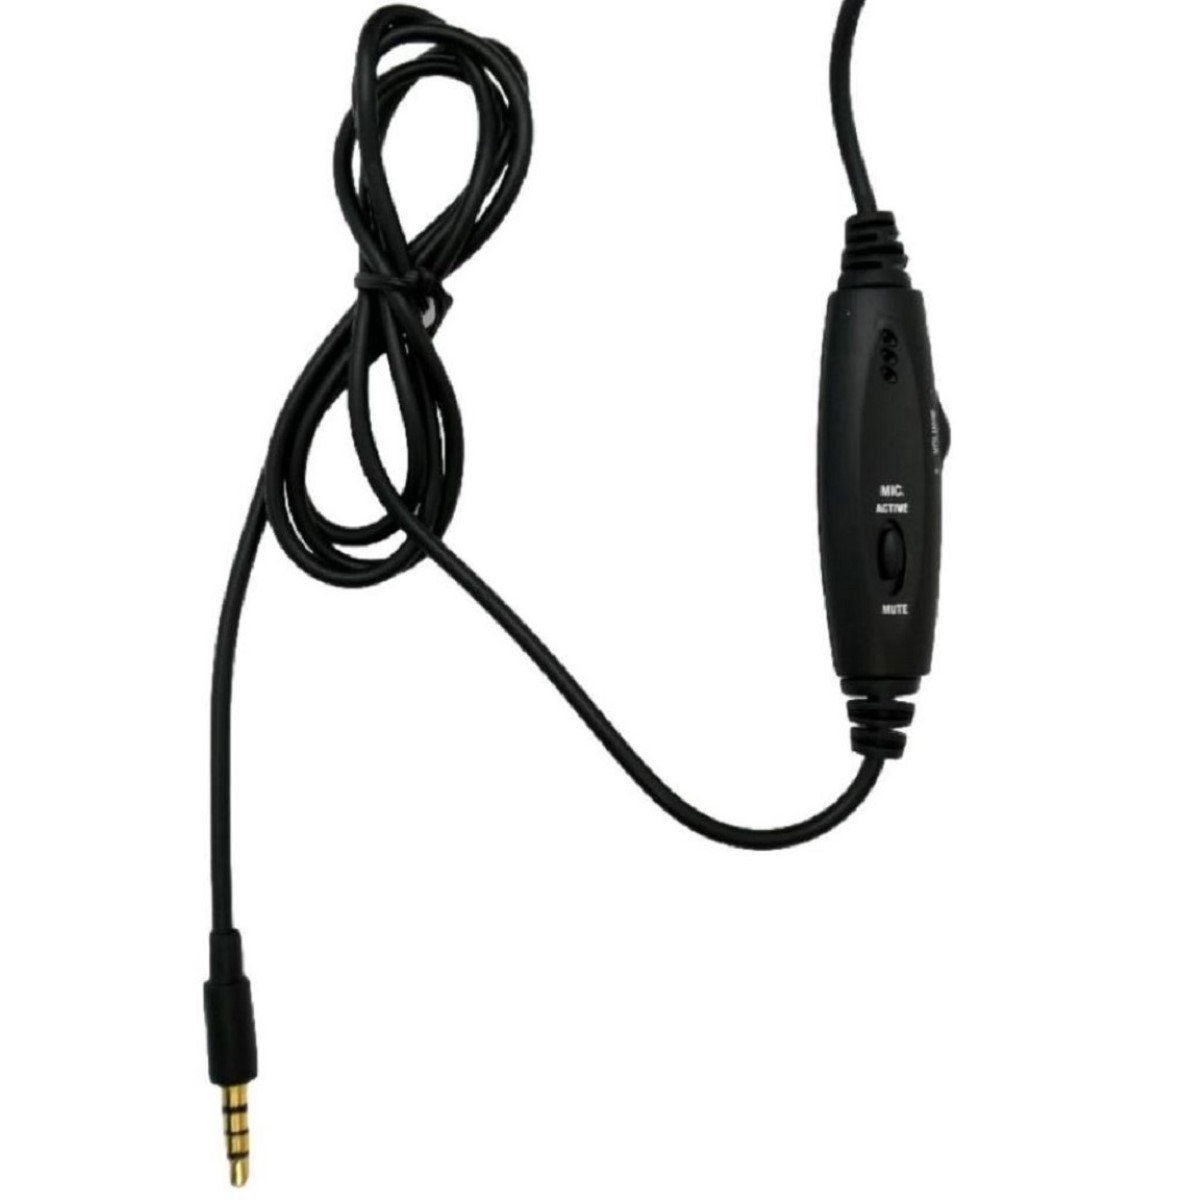 Hifi) MP3 passend Speedlink (Integrierte Kabelfernbedienung 3,5mm Lautstärkeregeler, + auch Headset X/S Mikrofon-Stummschaltung, Mikrofon Kopfhörer Over-Ear PS5 PS4 Series mit One, BAZZ Headset Stereo, Handy Klinke für Xbox